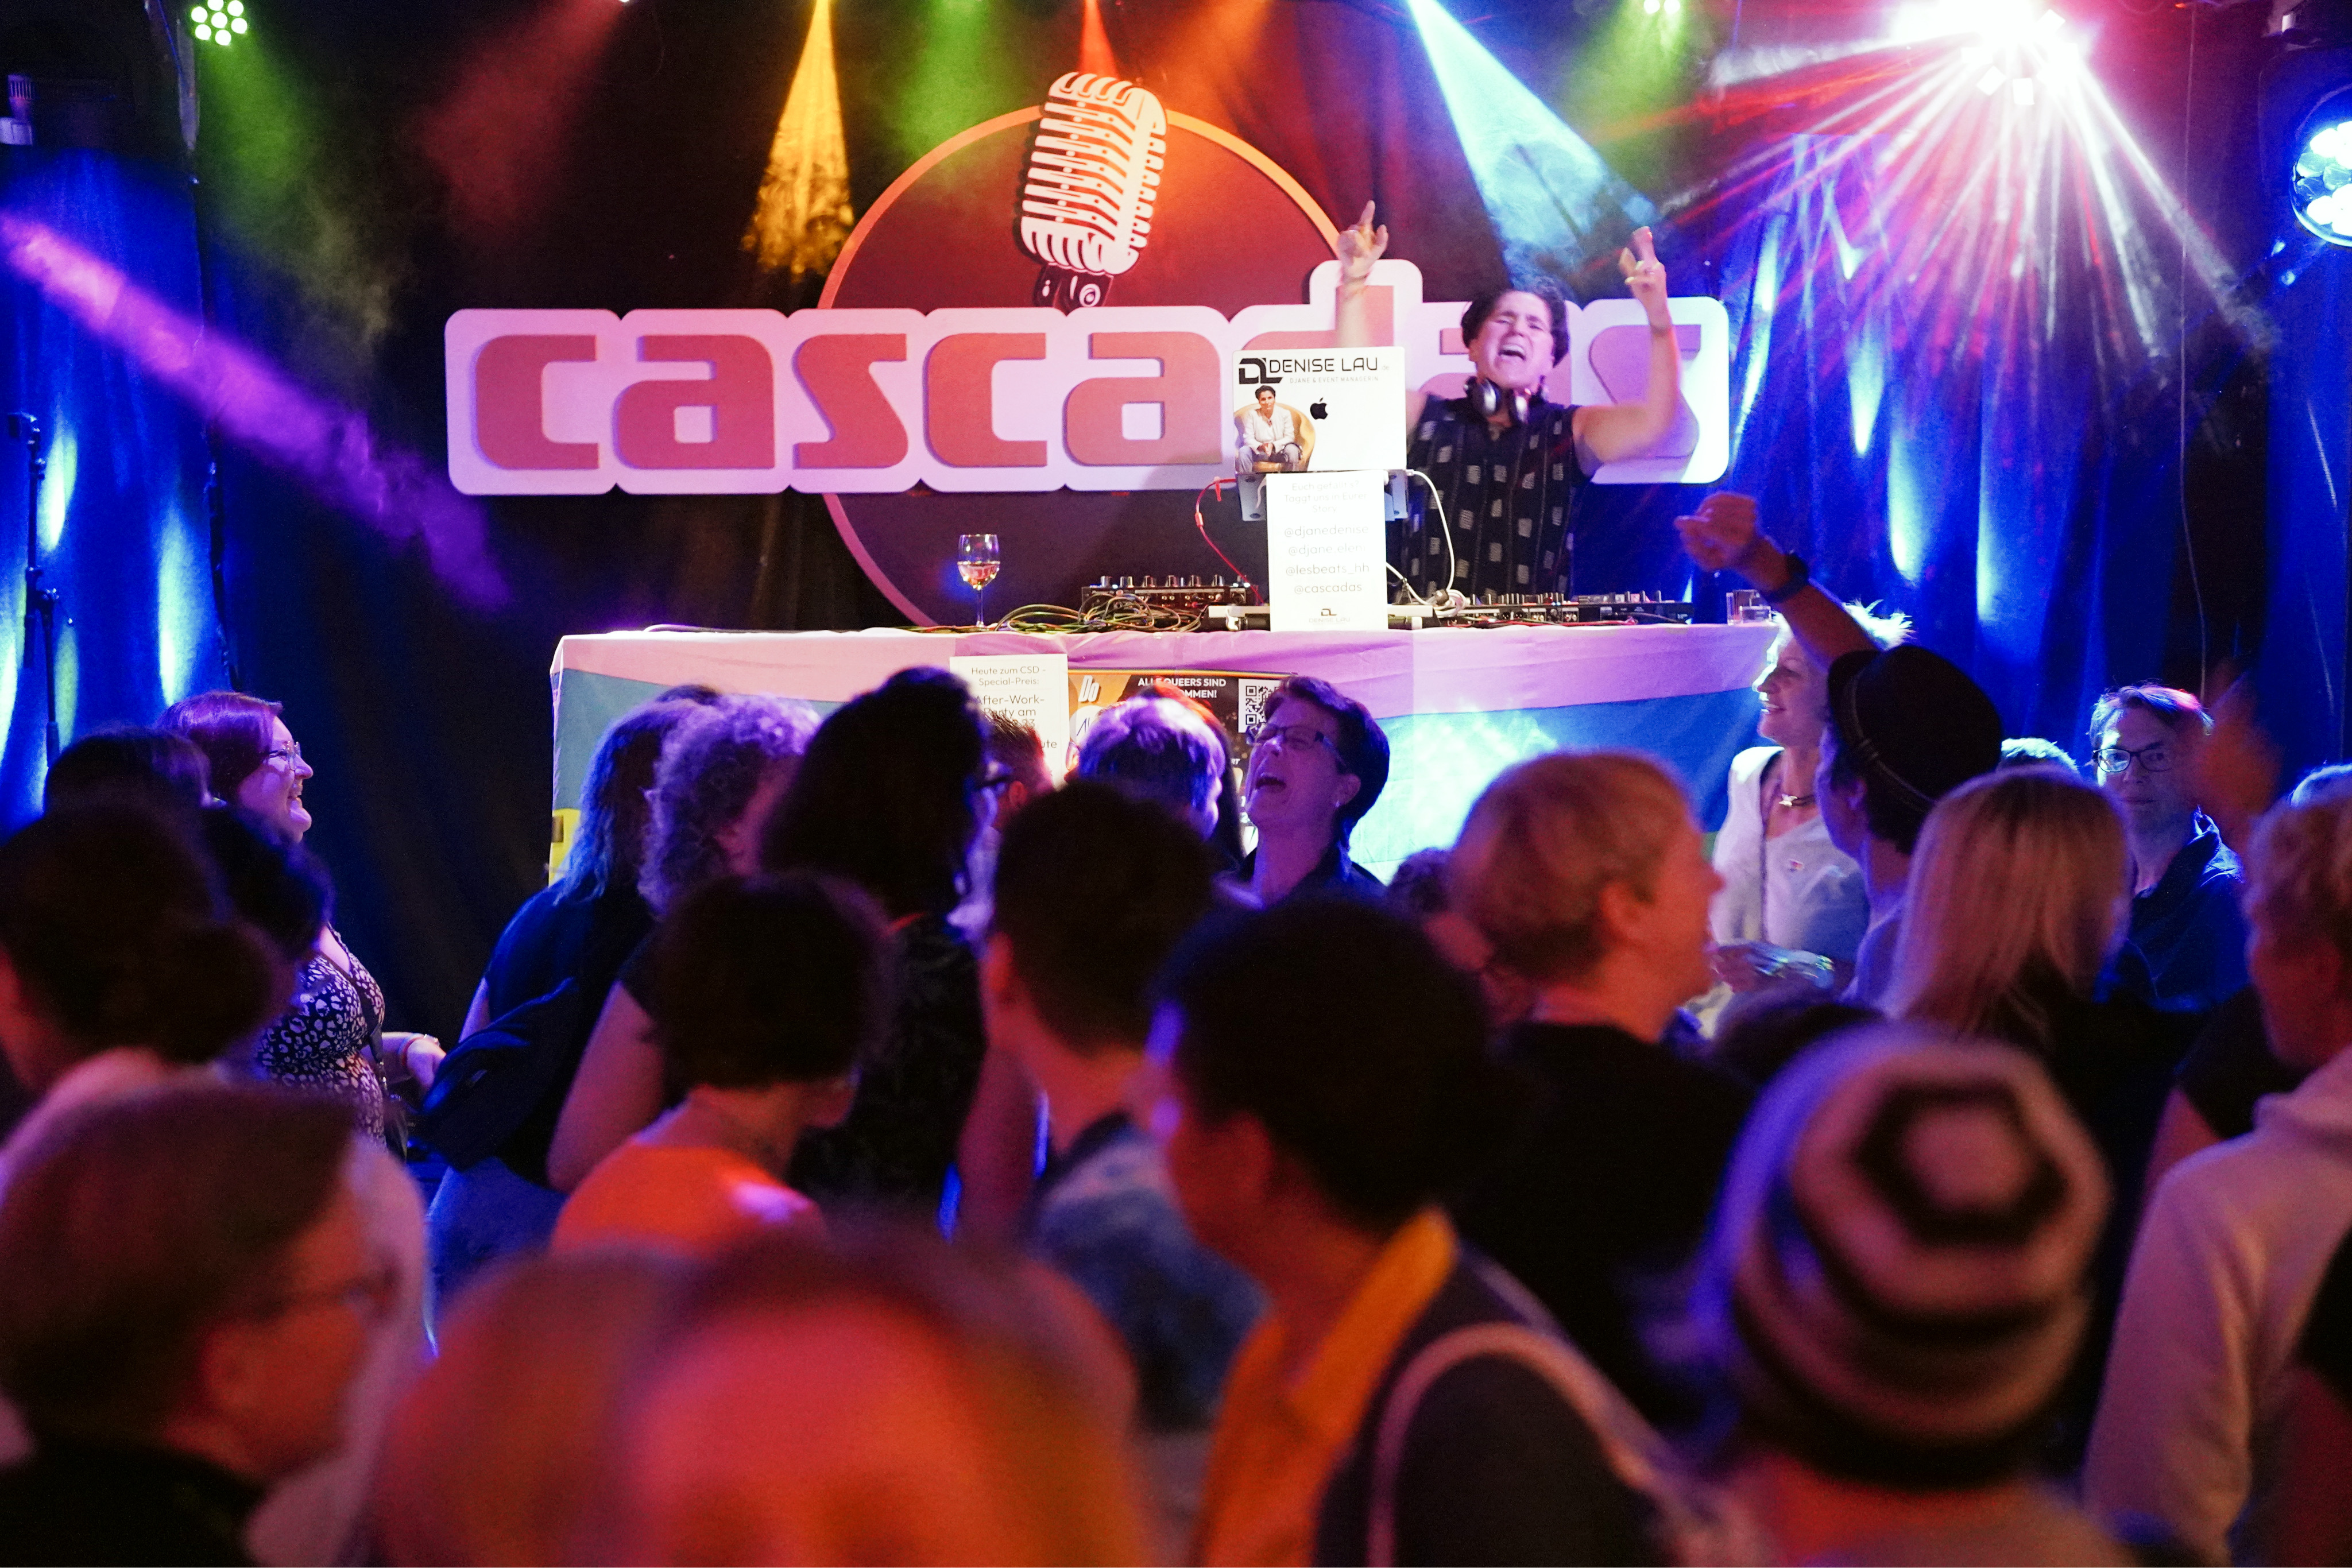 Flyer CSD Frauen Party 04.08.23 im Cascadas Club an der Alster - DJ Denise Lau